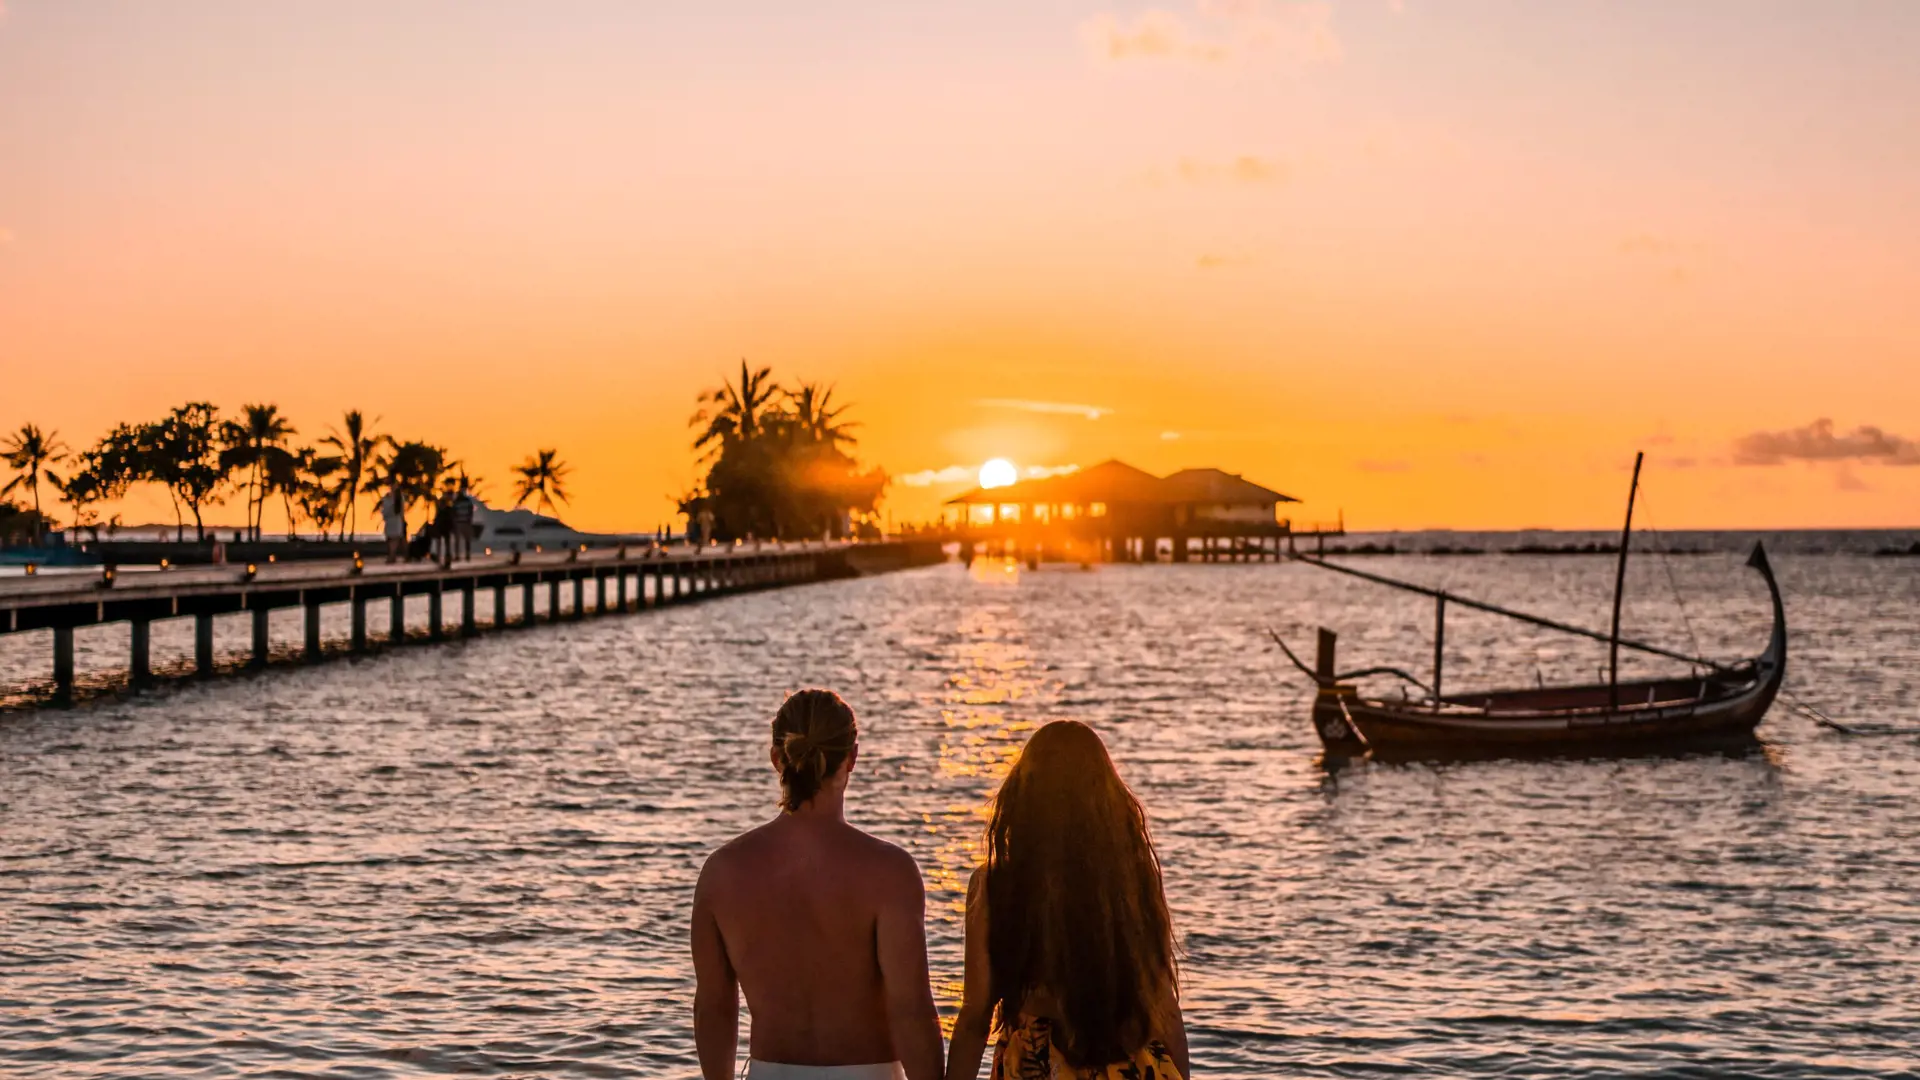 Villa Nautica Influencer Couple Watching Sunset At The Beach 4K Kopi